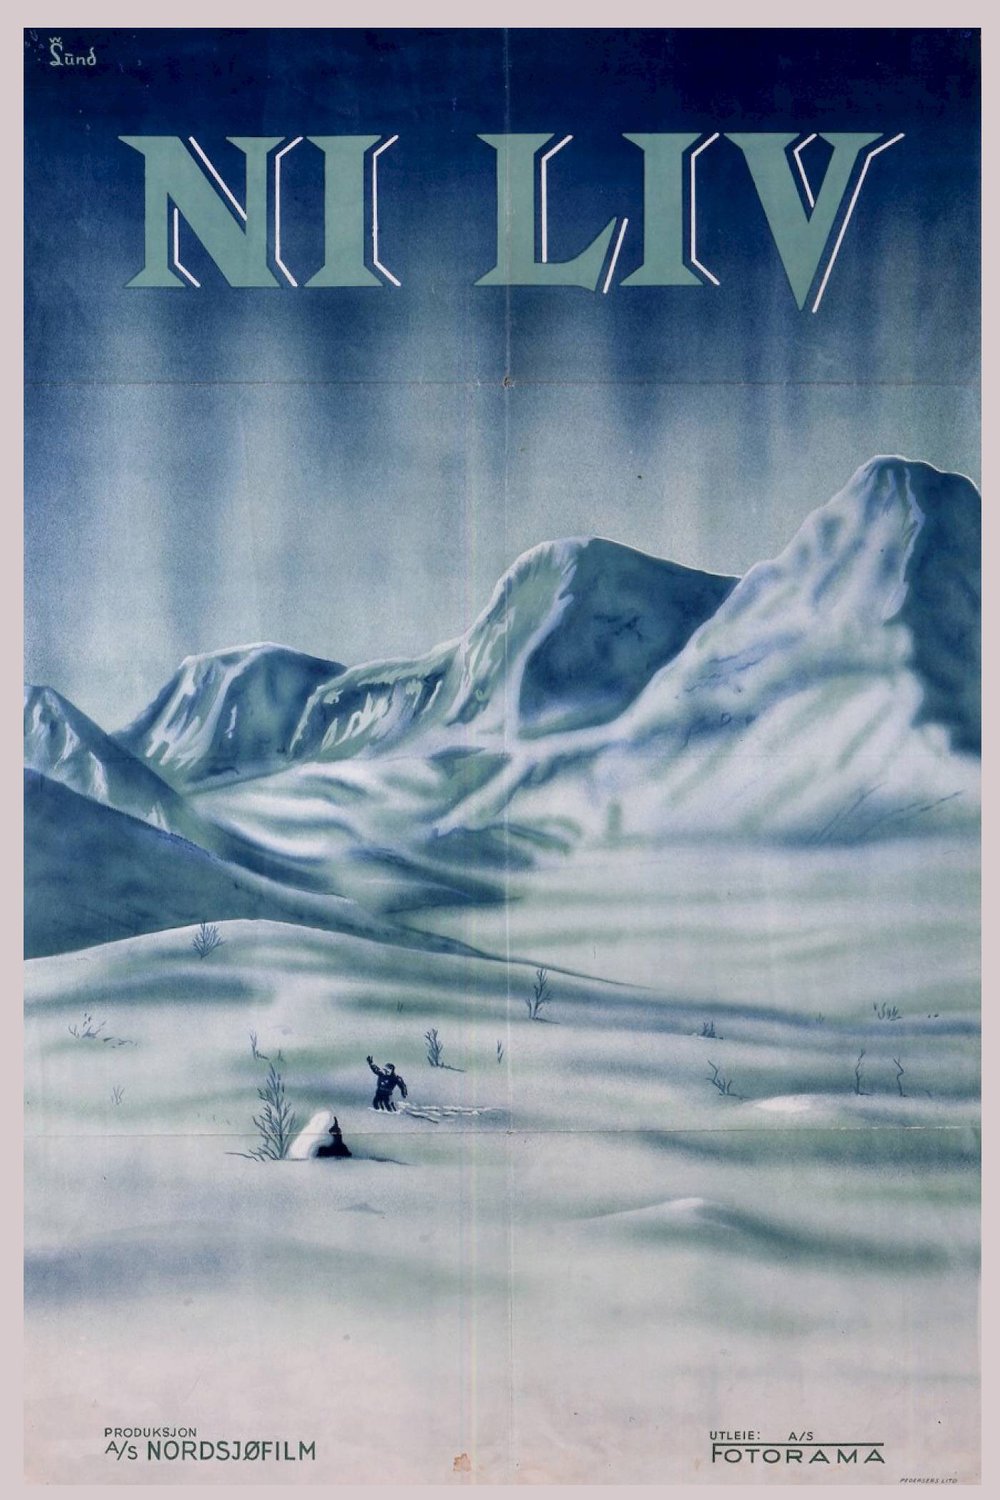 Norwegian poster of the movie Nine Lives